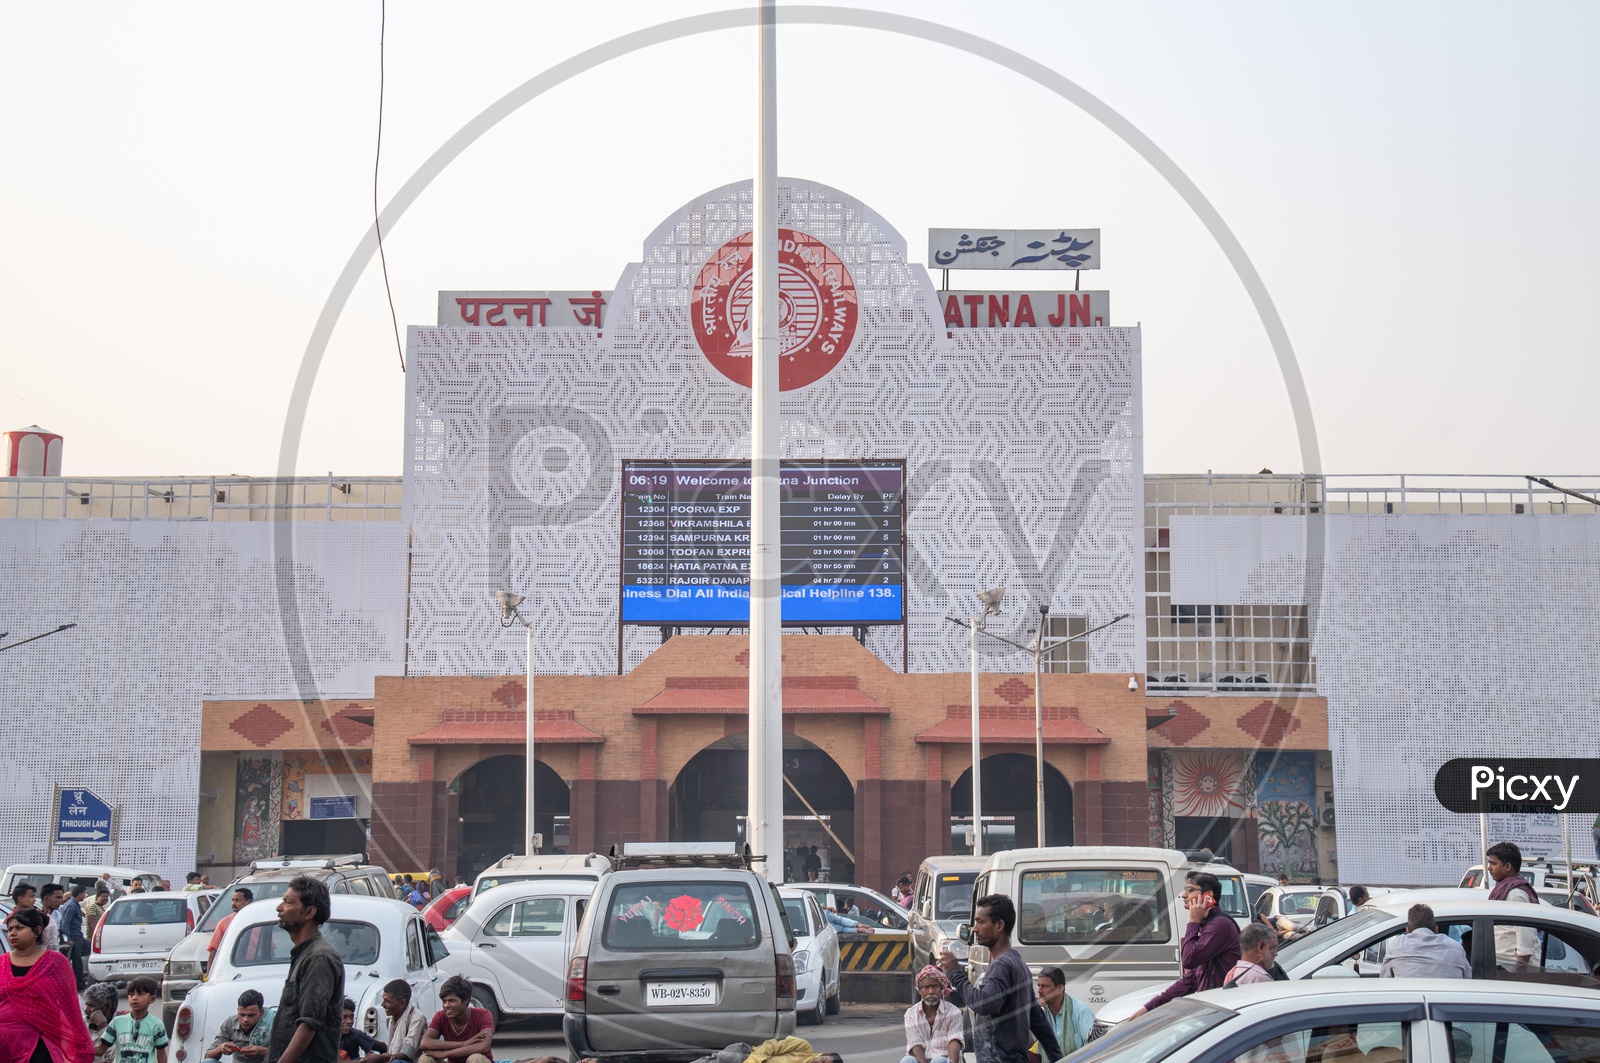 Patna Junction Main Railway Station Building